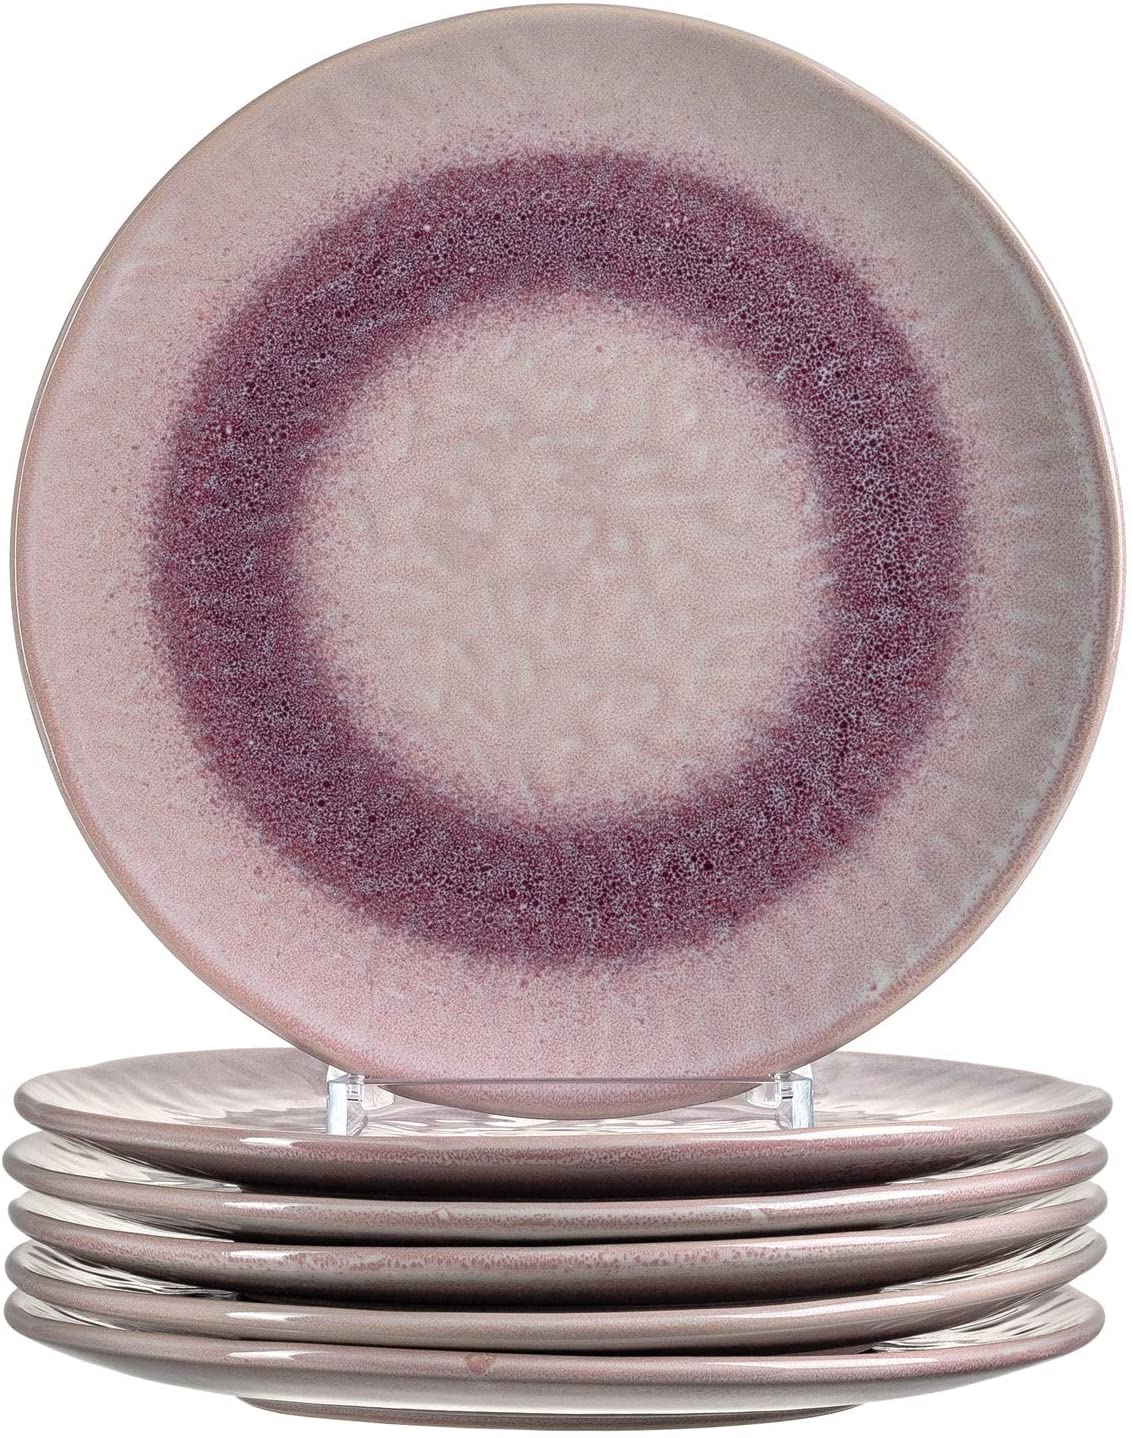 Leonardo Matera 018570 Ceramic Plates Set of 6 Dishwasher Safe Dinner Plates with Glaze 6 Round Stoneware Plates Diameter 22.5 cm Pink